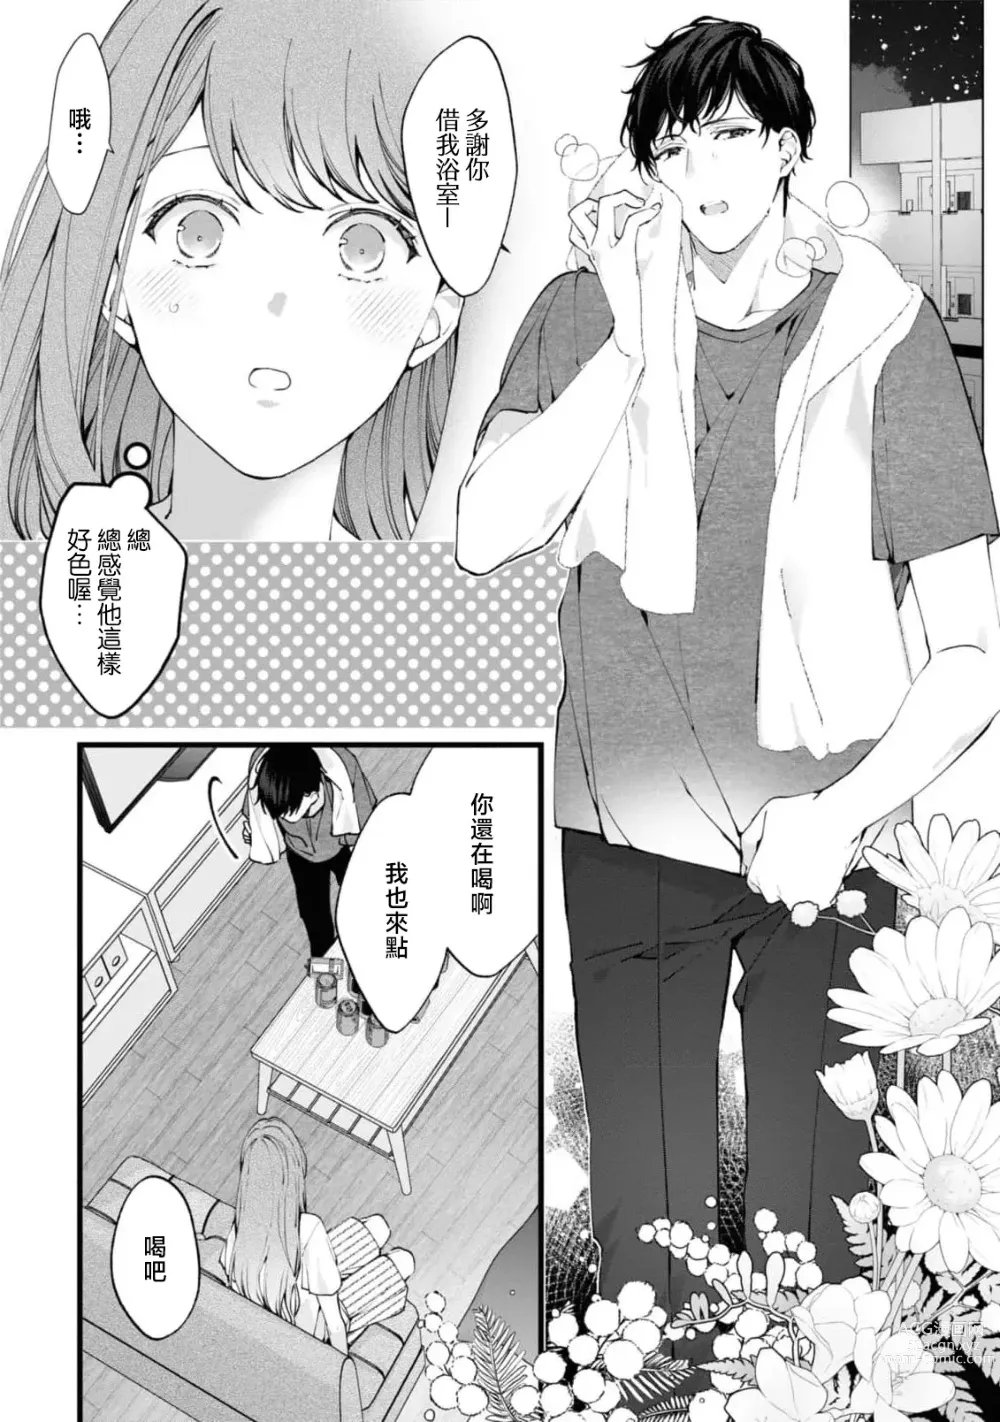 Page 5 of manga 「命运之恋近在咫尺～沉醉于好友的技巧之中～」